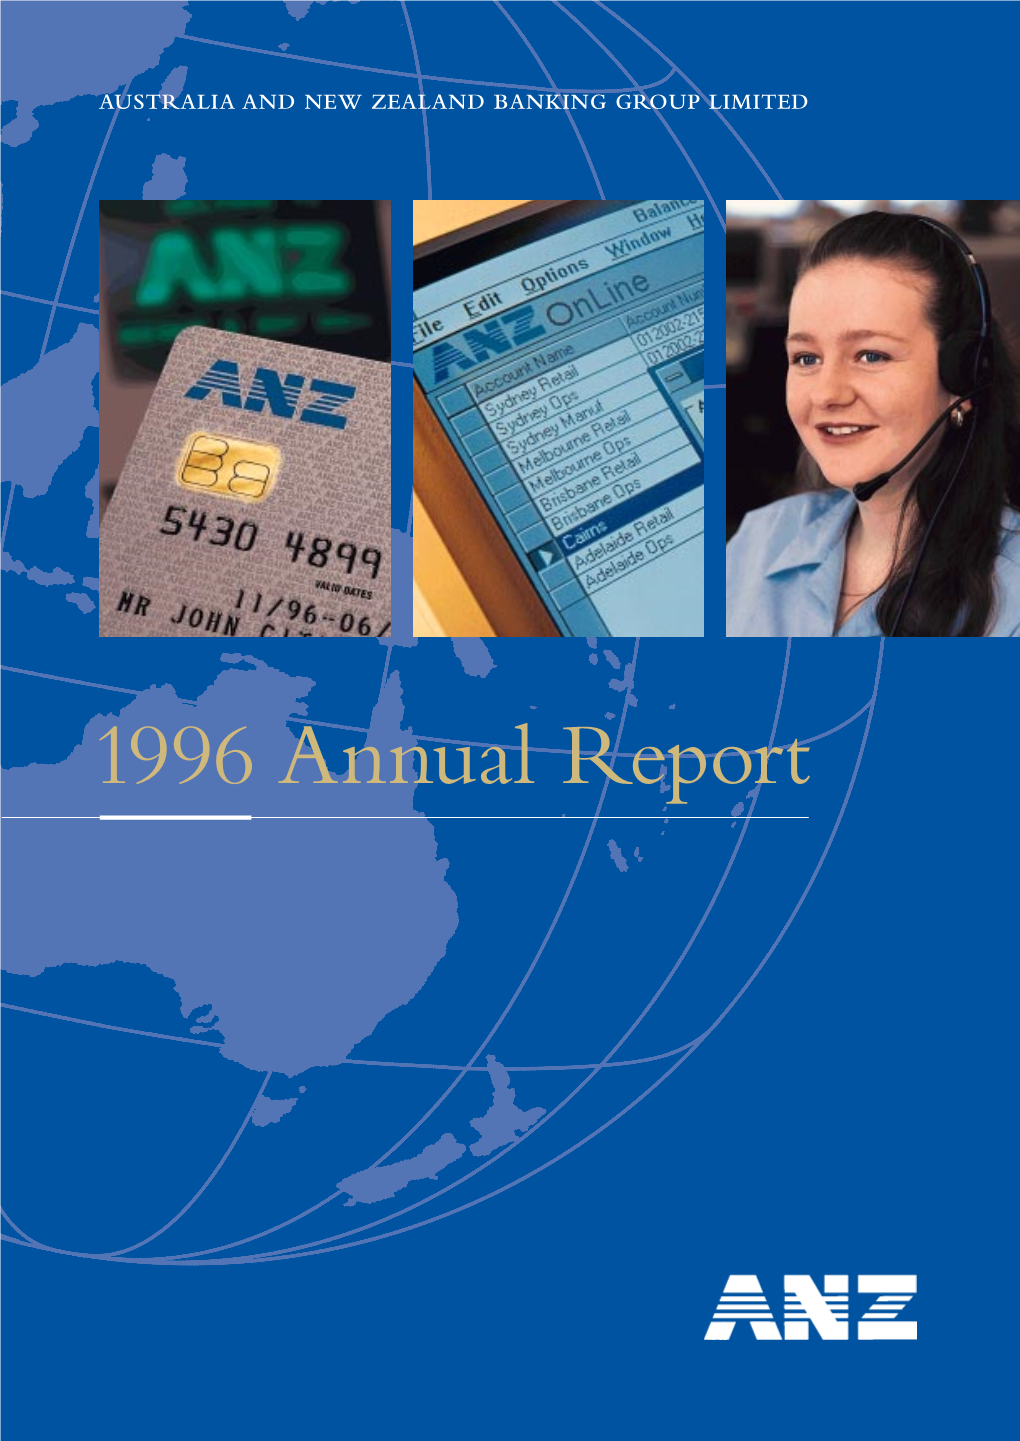 1996 Annual Report